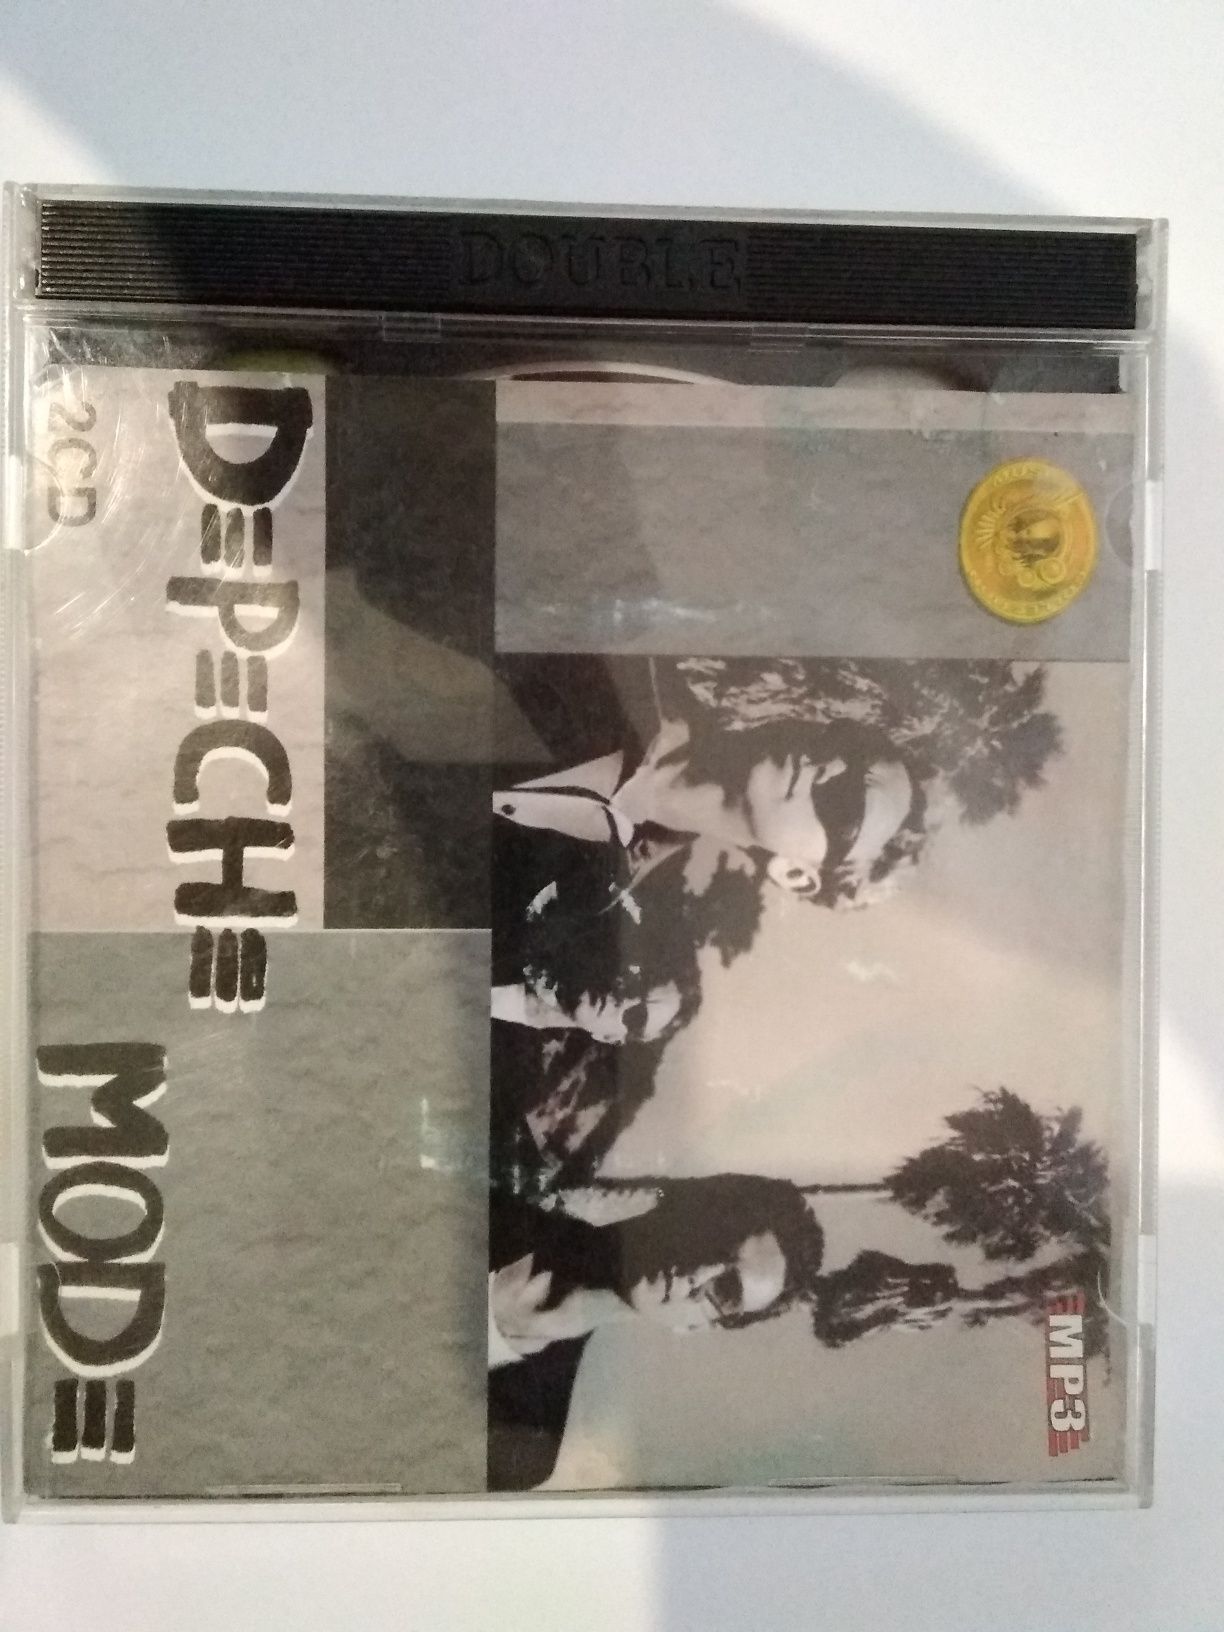 Audio CD Depeche mode.